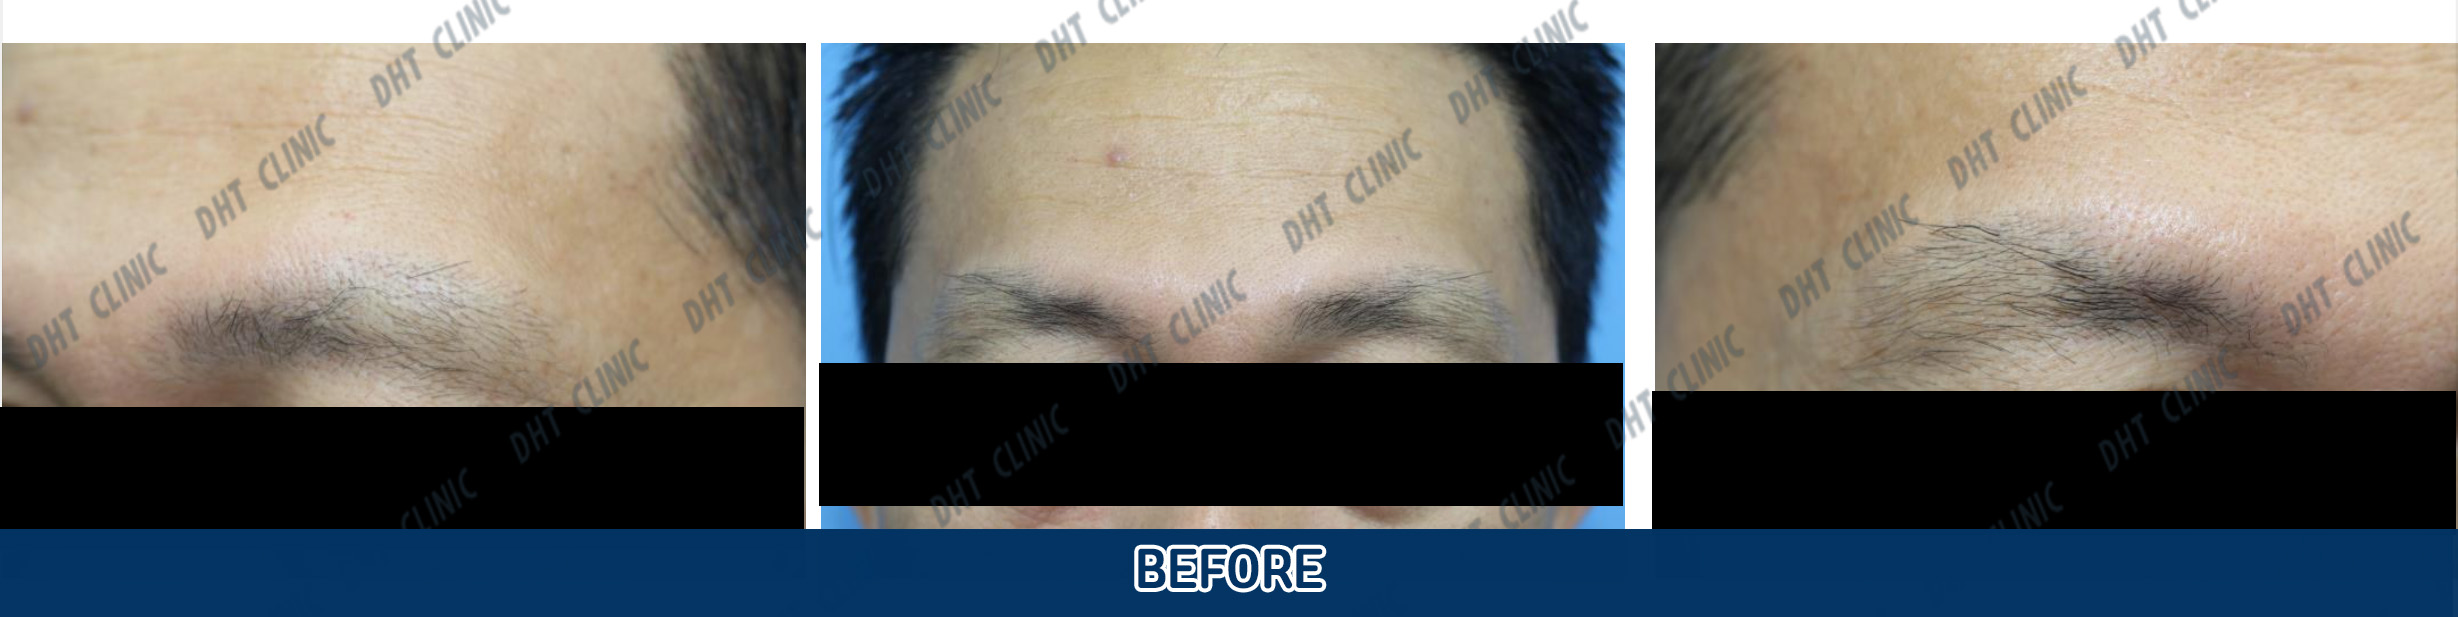 Eyebrow Hair Transplant / Immediately after transplant